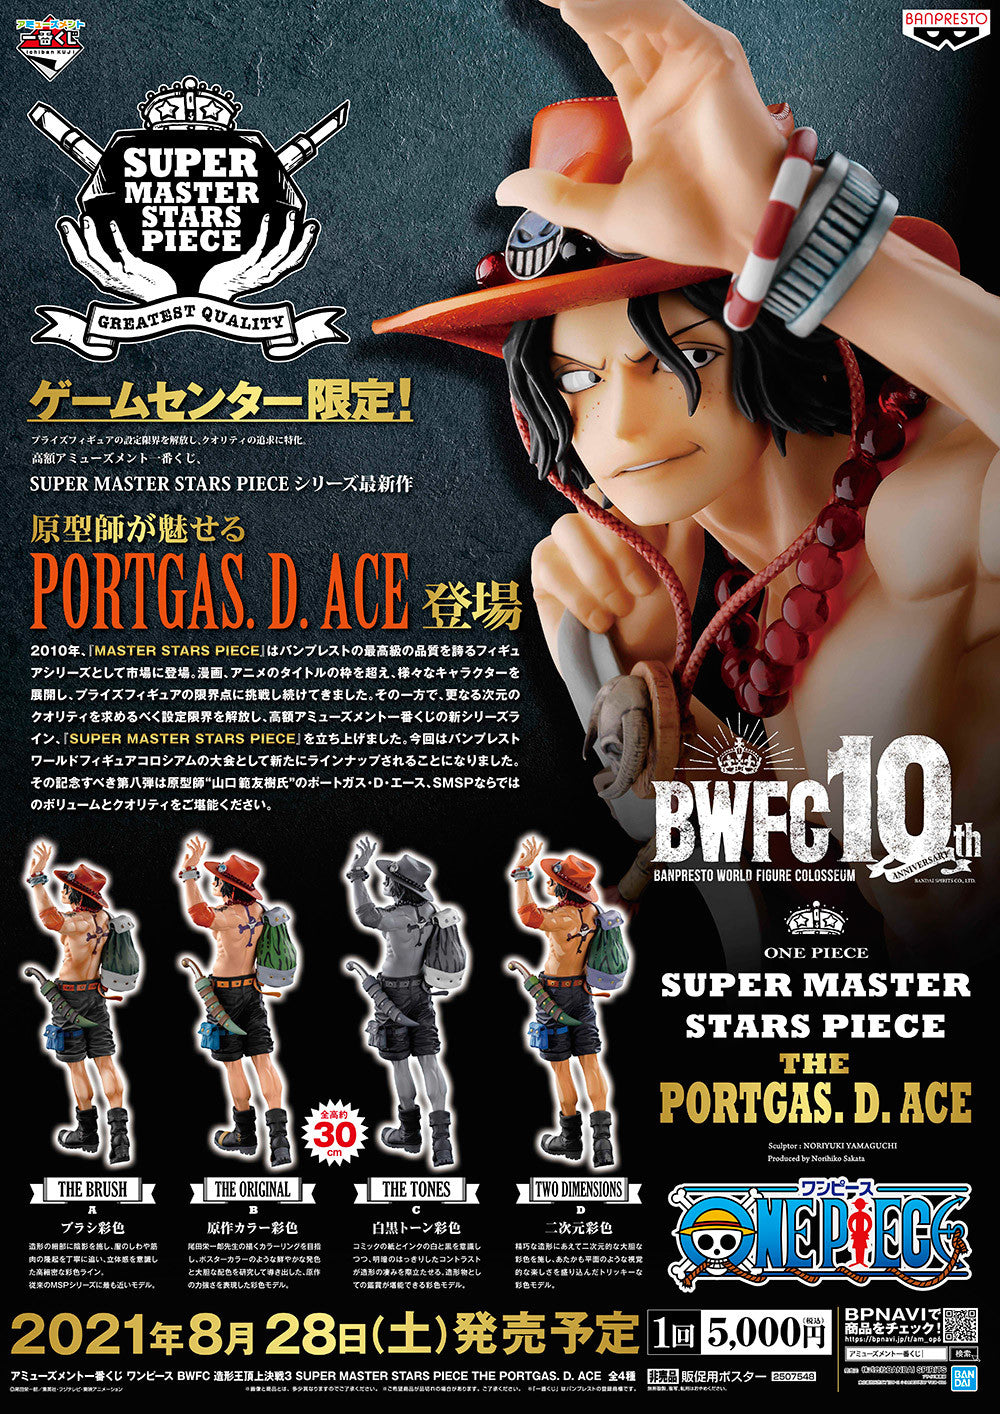 One Piece World Figure Colosseum 3 Super Master Stars Monkey D. Luffy Gear 4  (The Brush)